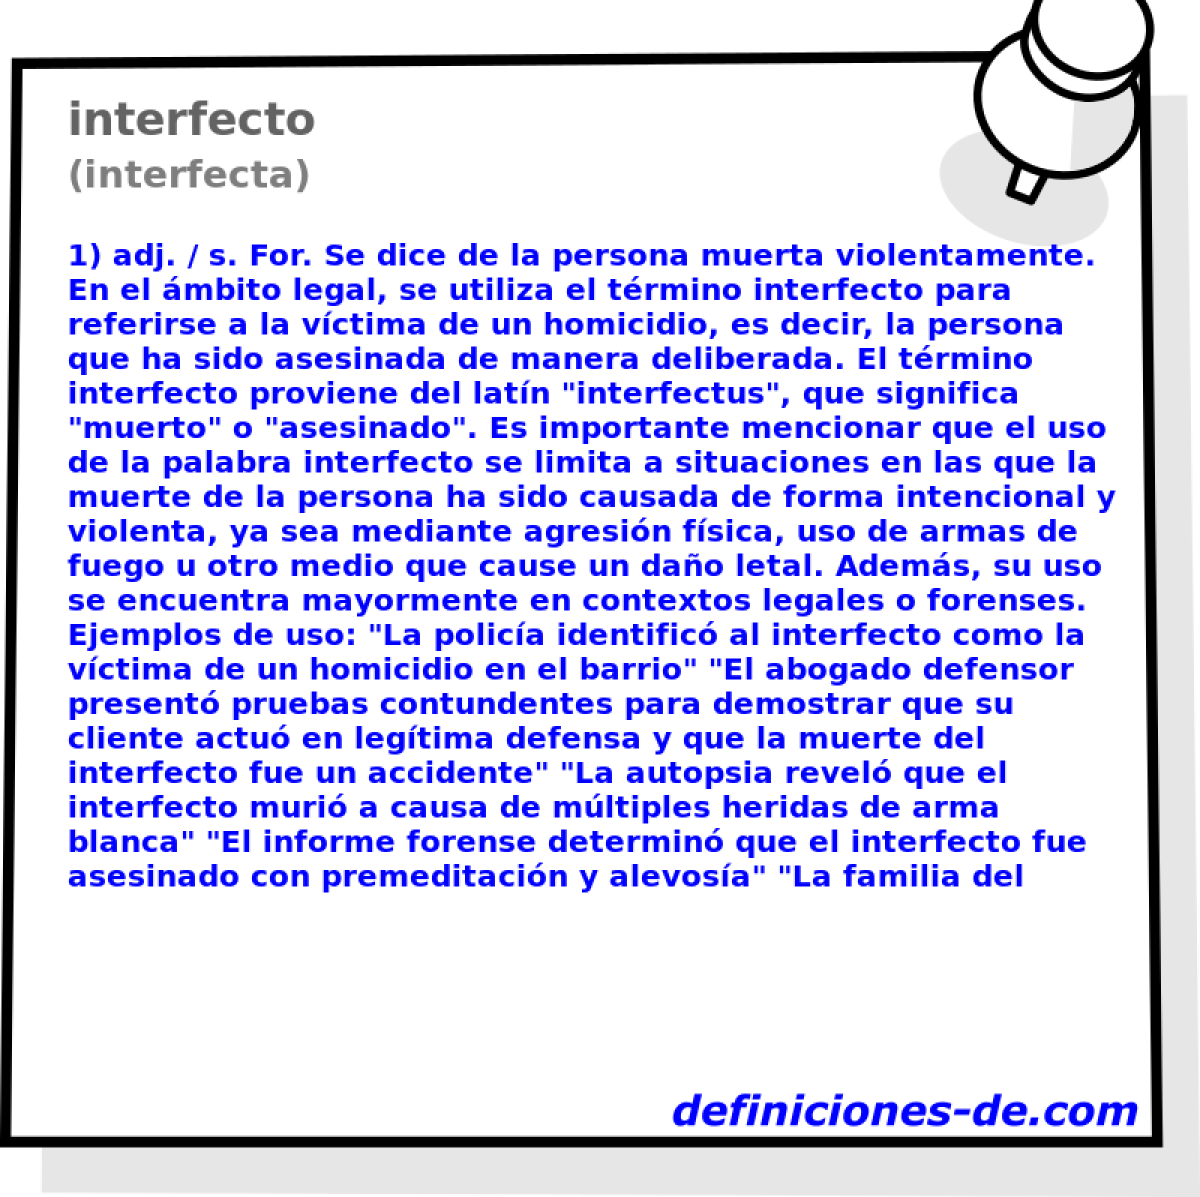 interfecto (interfecta)